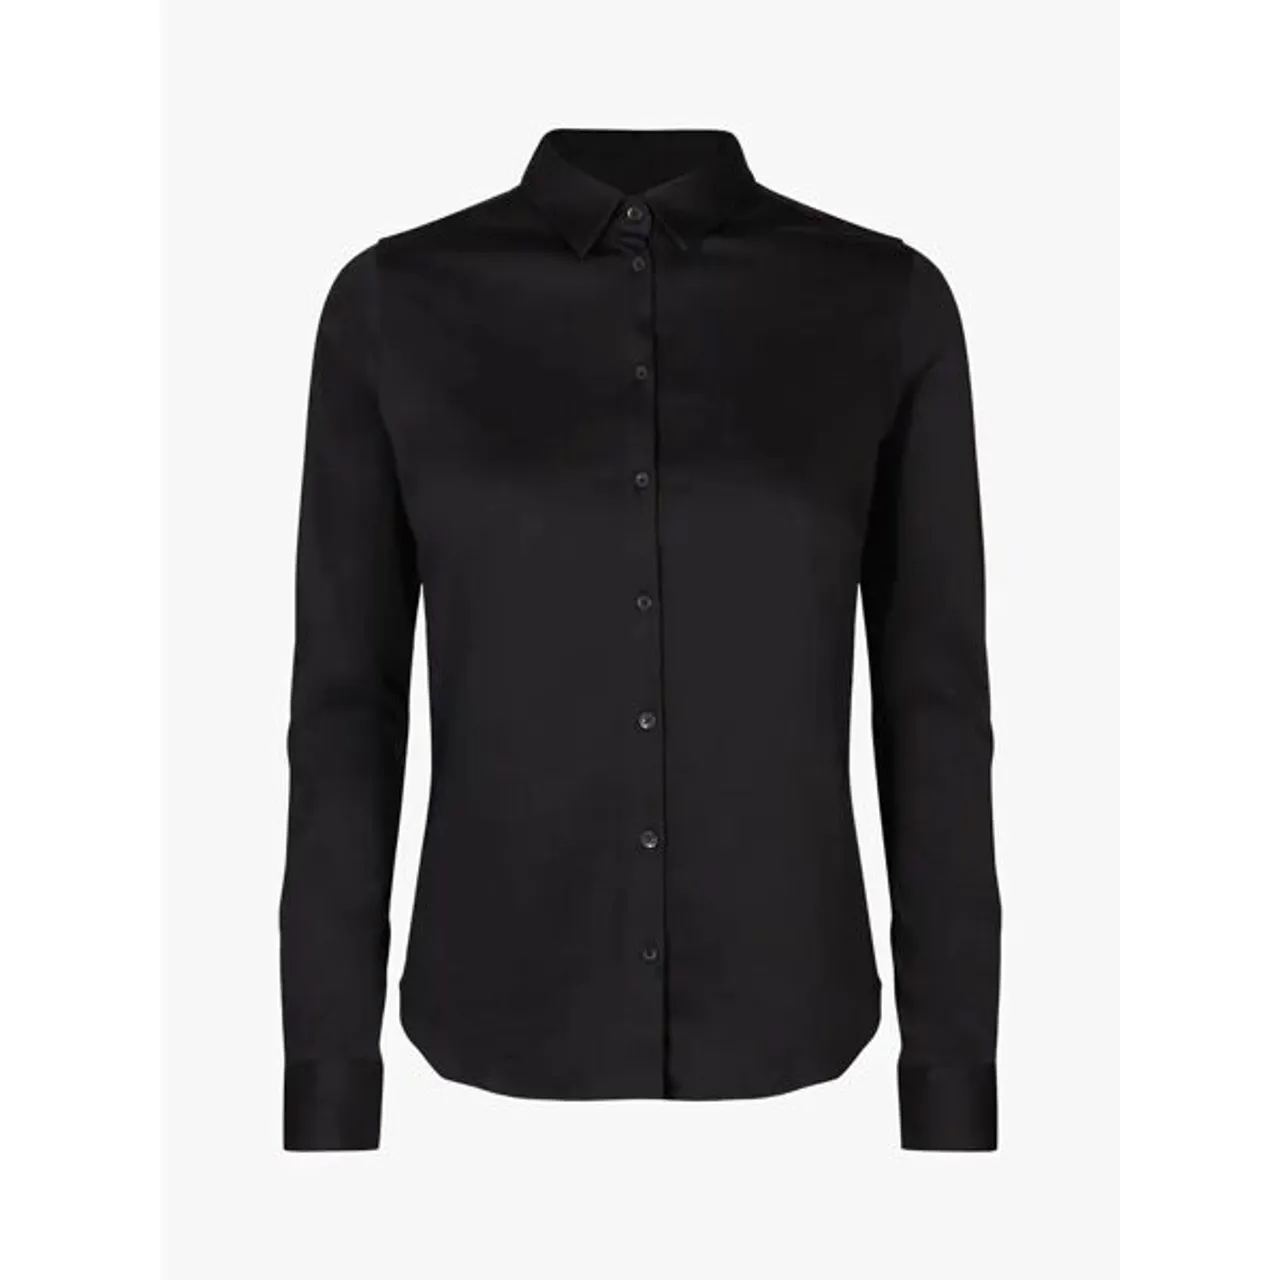 MOS MOSH Tina Jersey Shirt - Black - Female